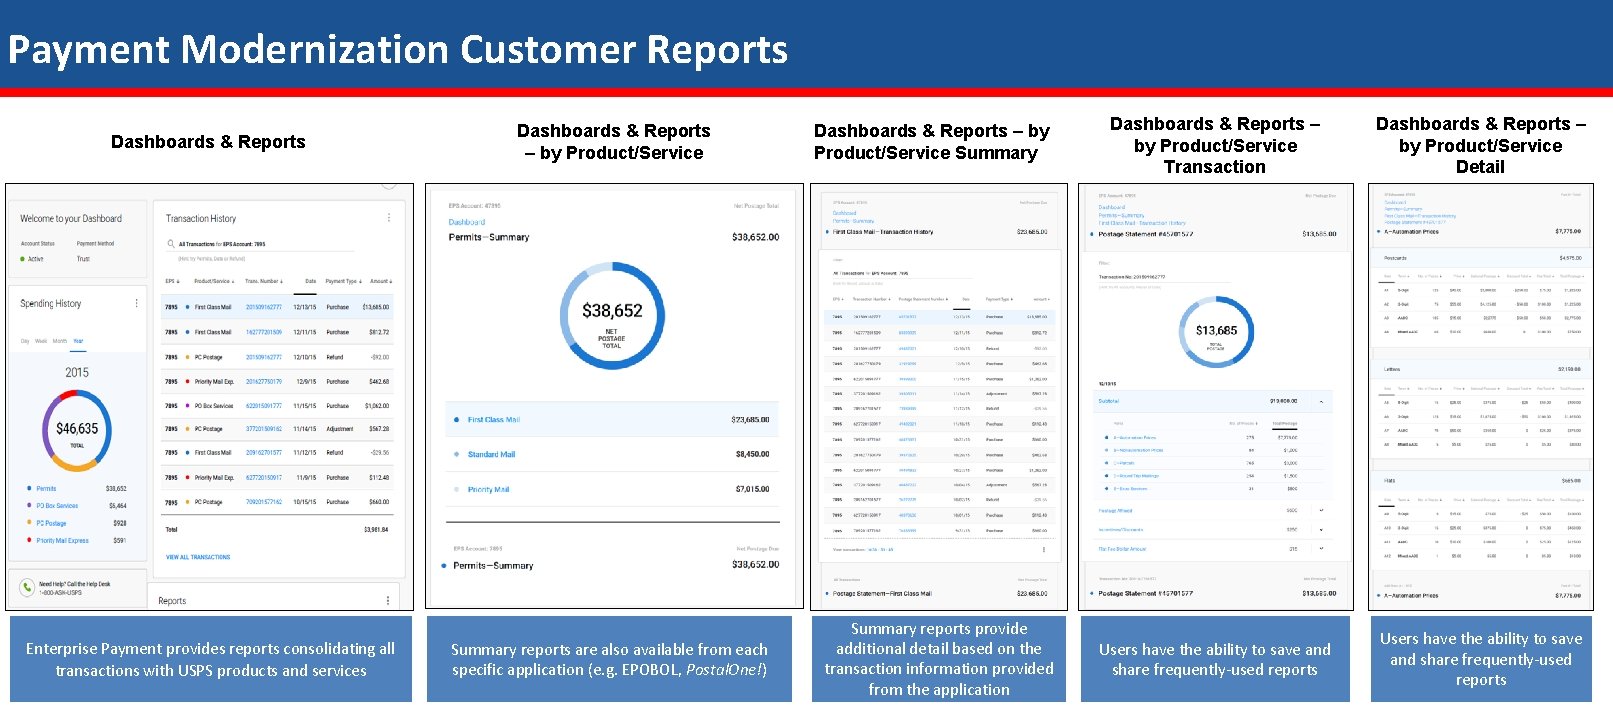 Payment Modernization Customer Reports Dashboards & Reports Enterprise Payment provides reports consolidating all transactions